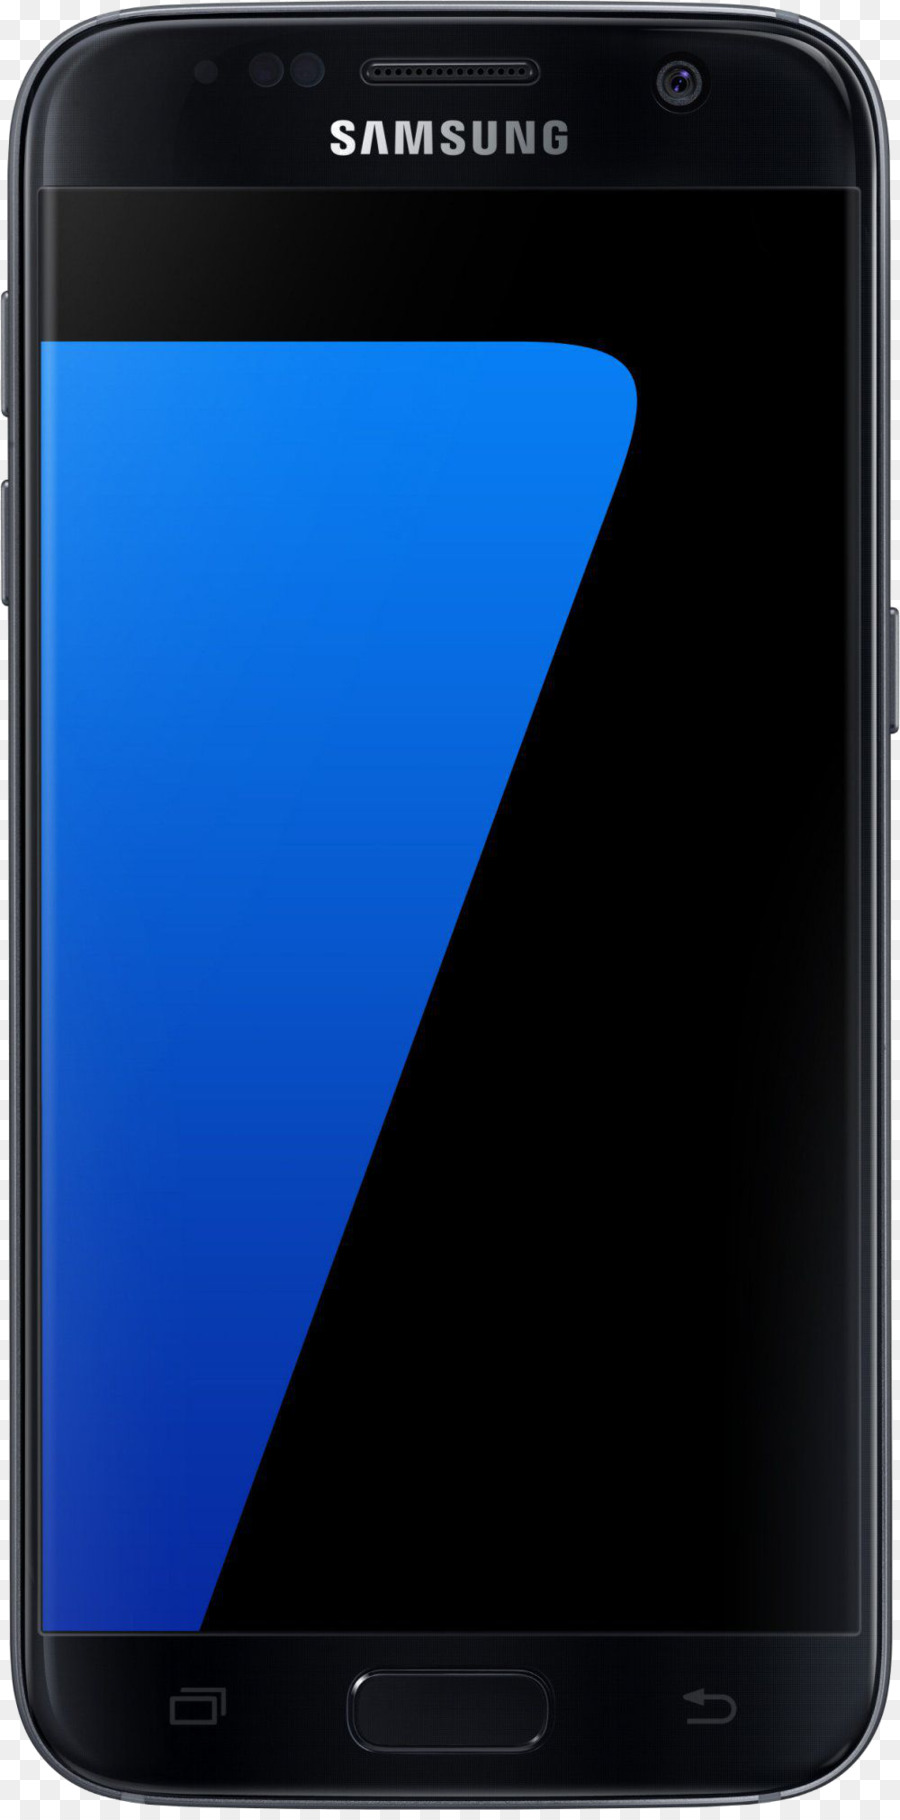 Samsung，Telefone PNG